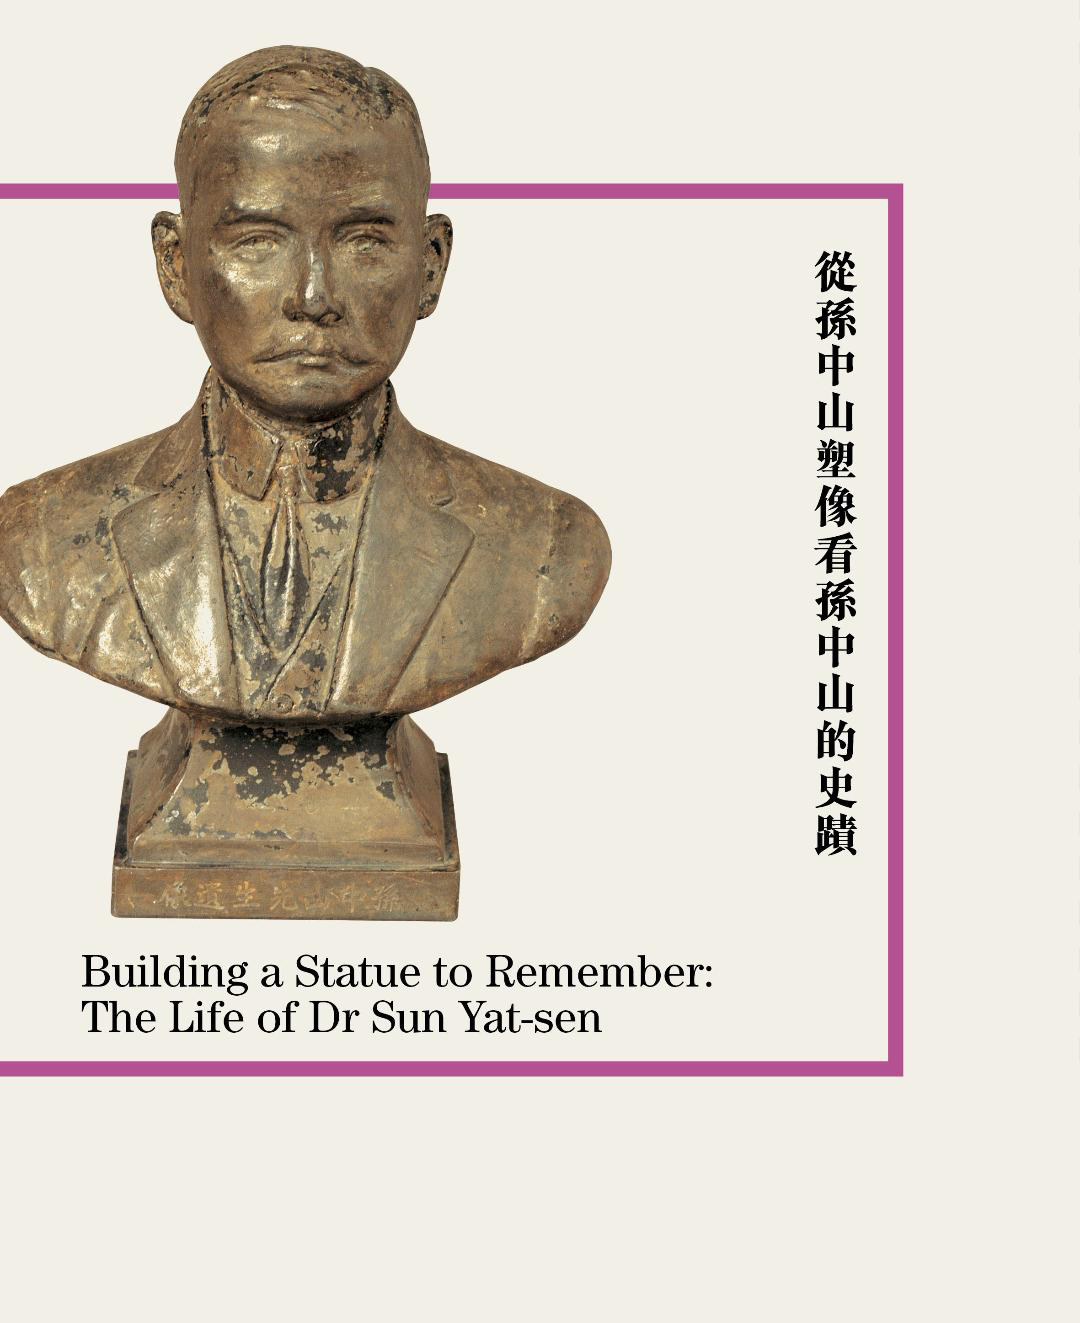 Thumbnail The Life of Dr Sun Yat-sen through His Statues